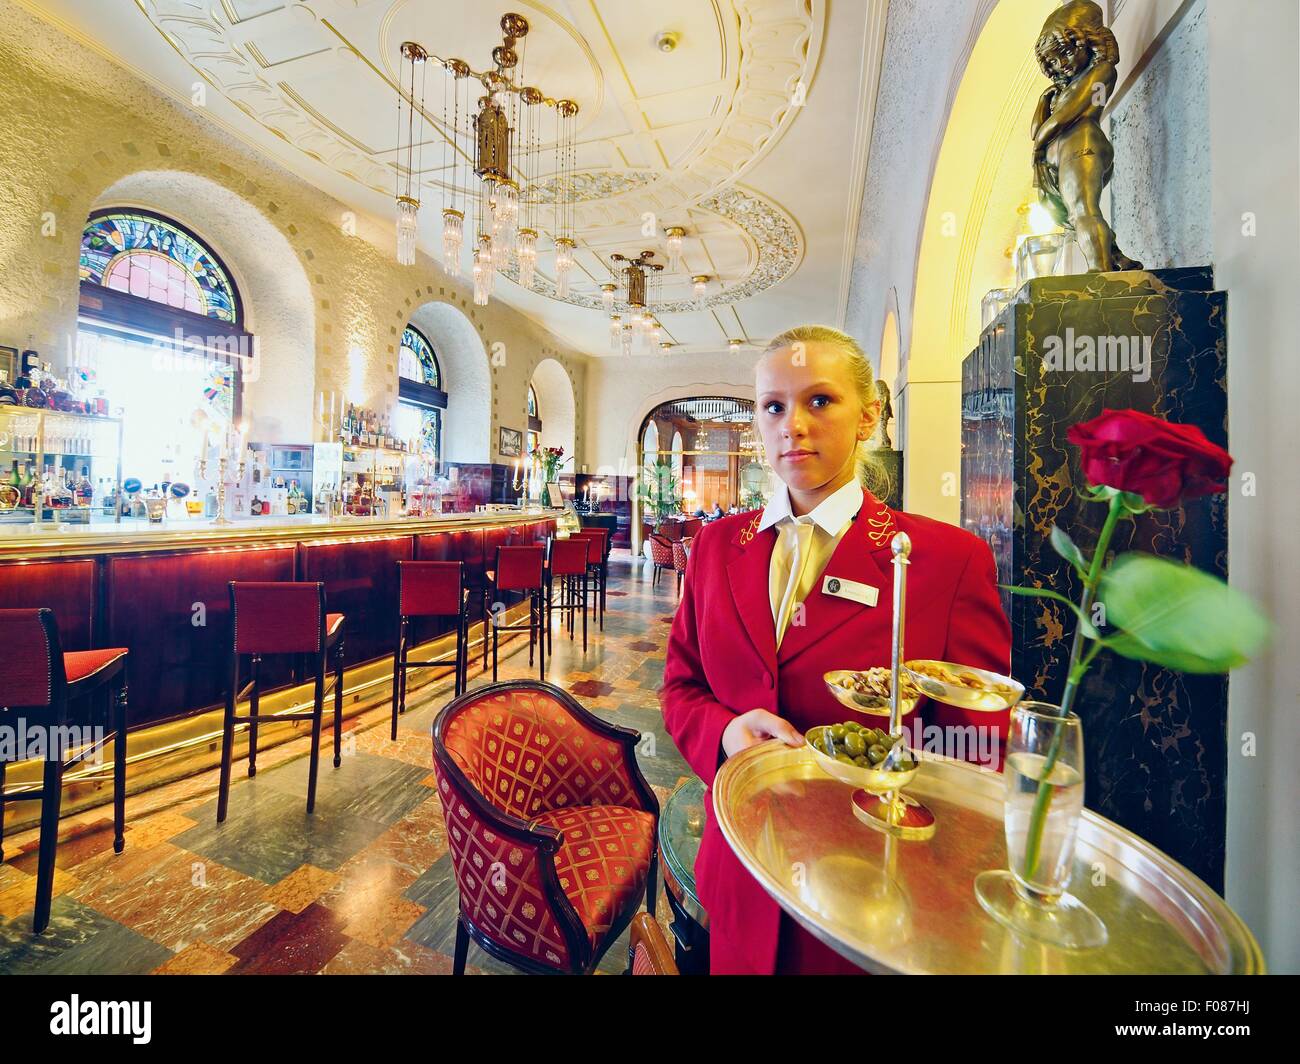 Belmond Grand Hotel Europe, Saint Petersburg